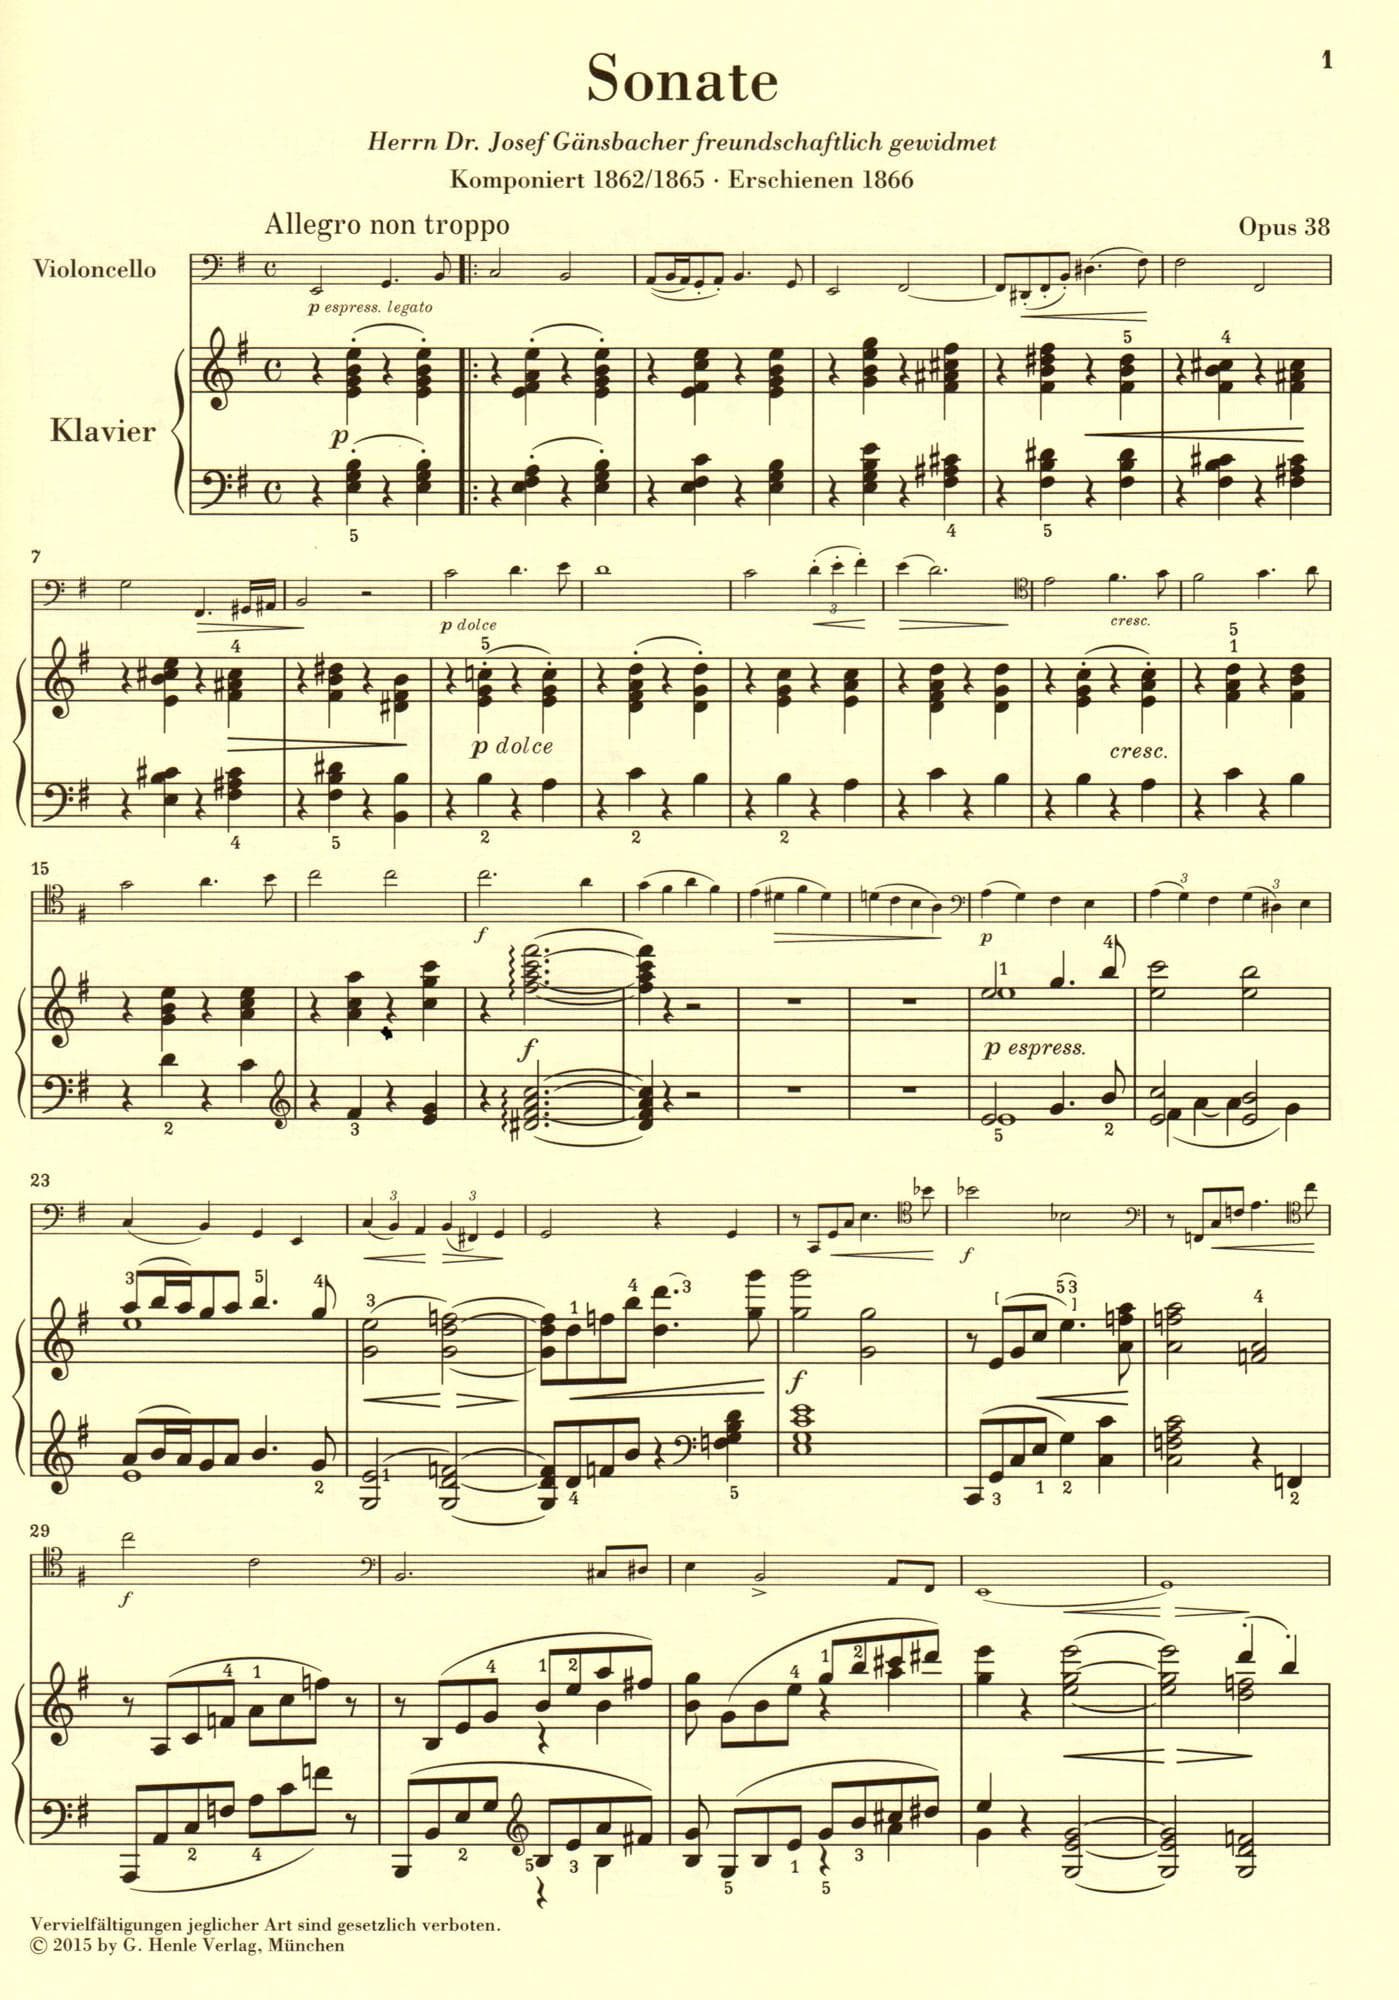 Brahms, Johannes - Sonata No 1 in e minor Op 38 for Cello and Piano - Henle Verlag URTEXT Edition